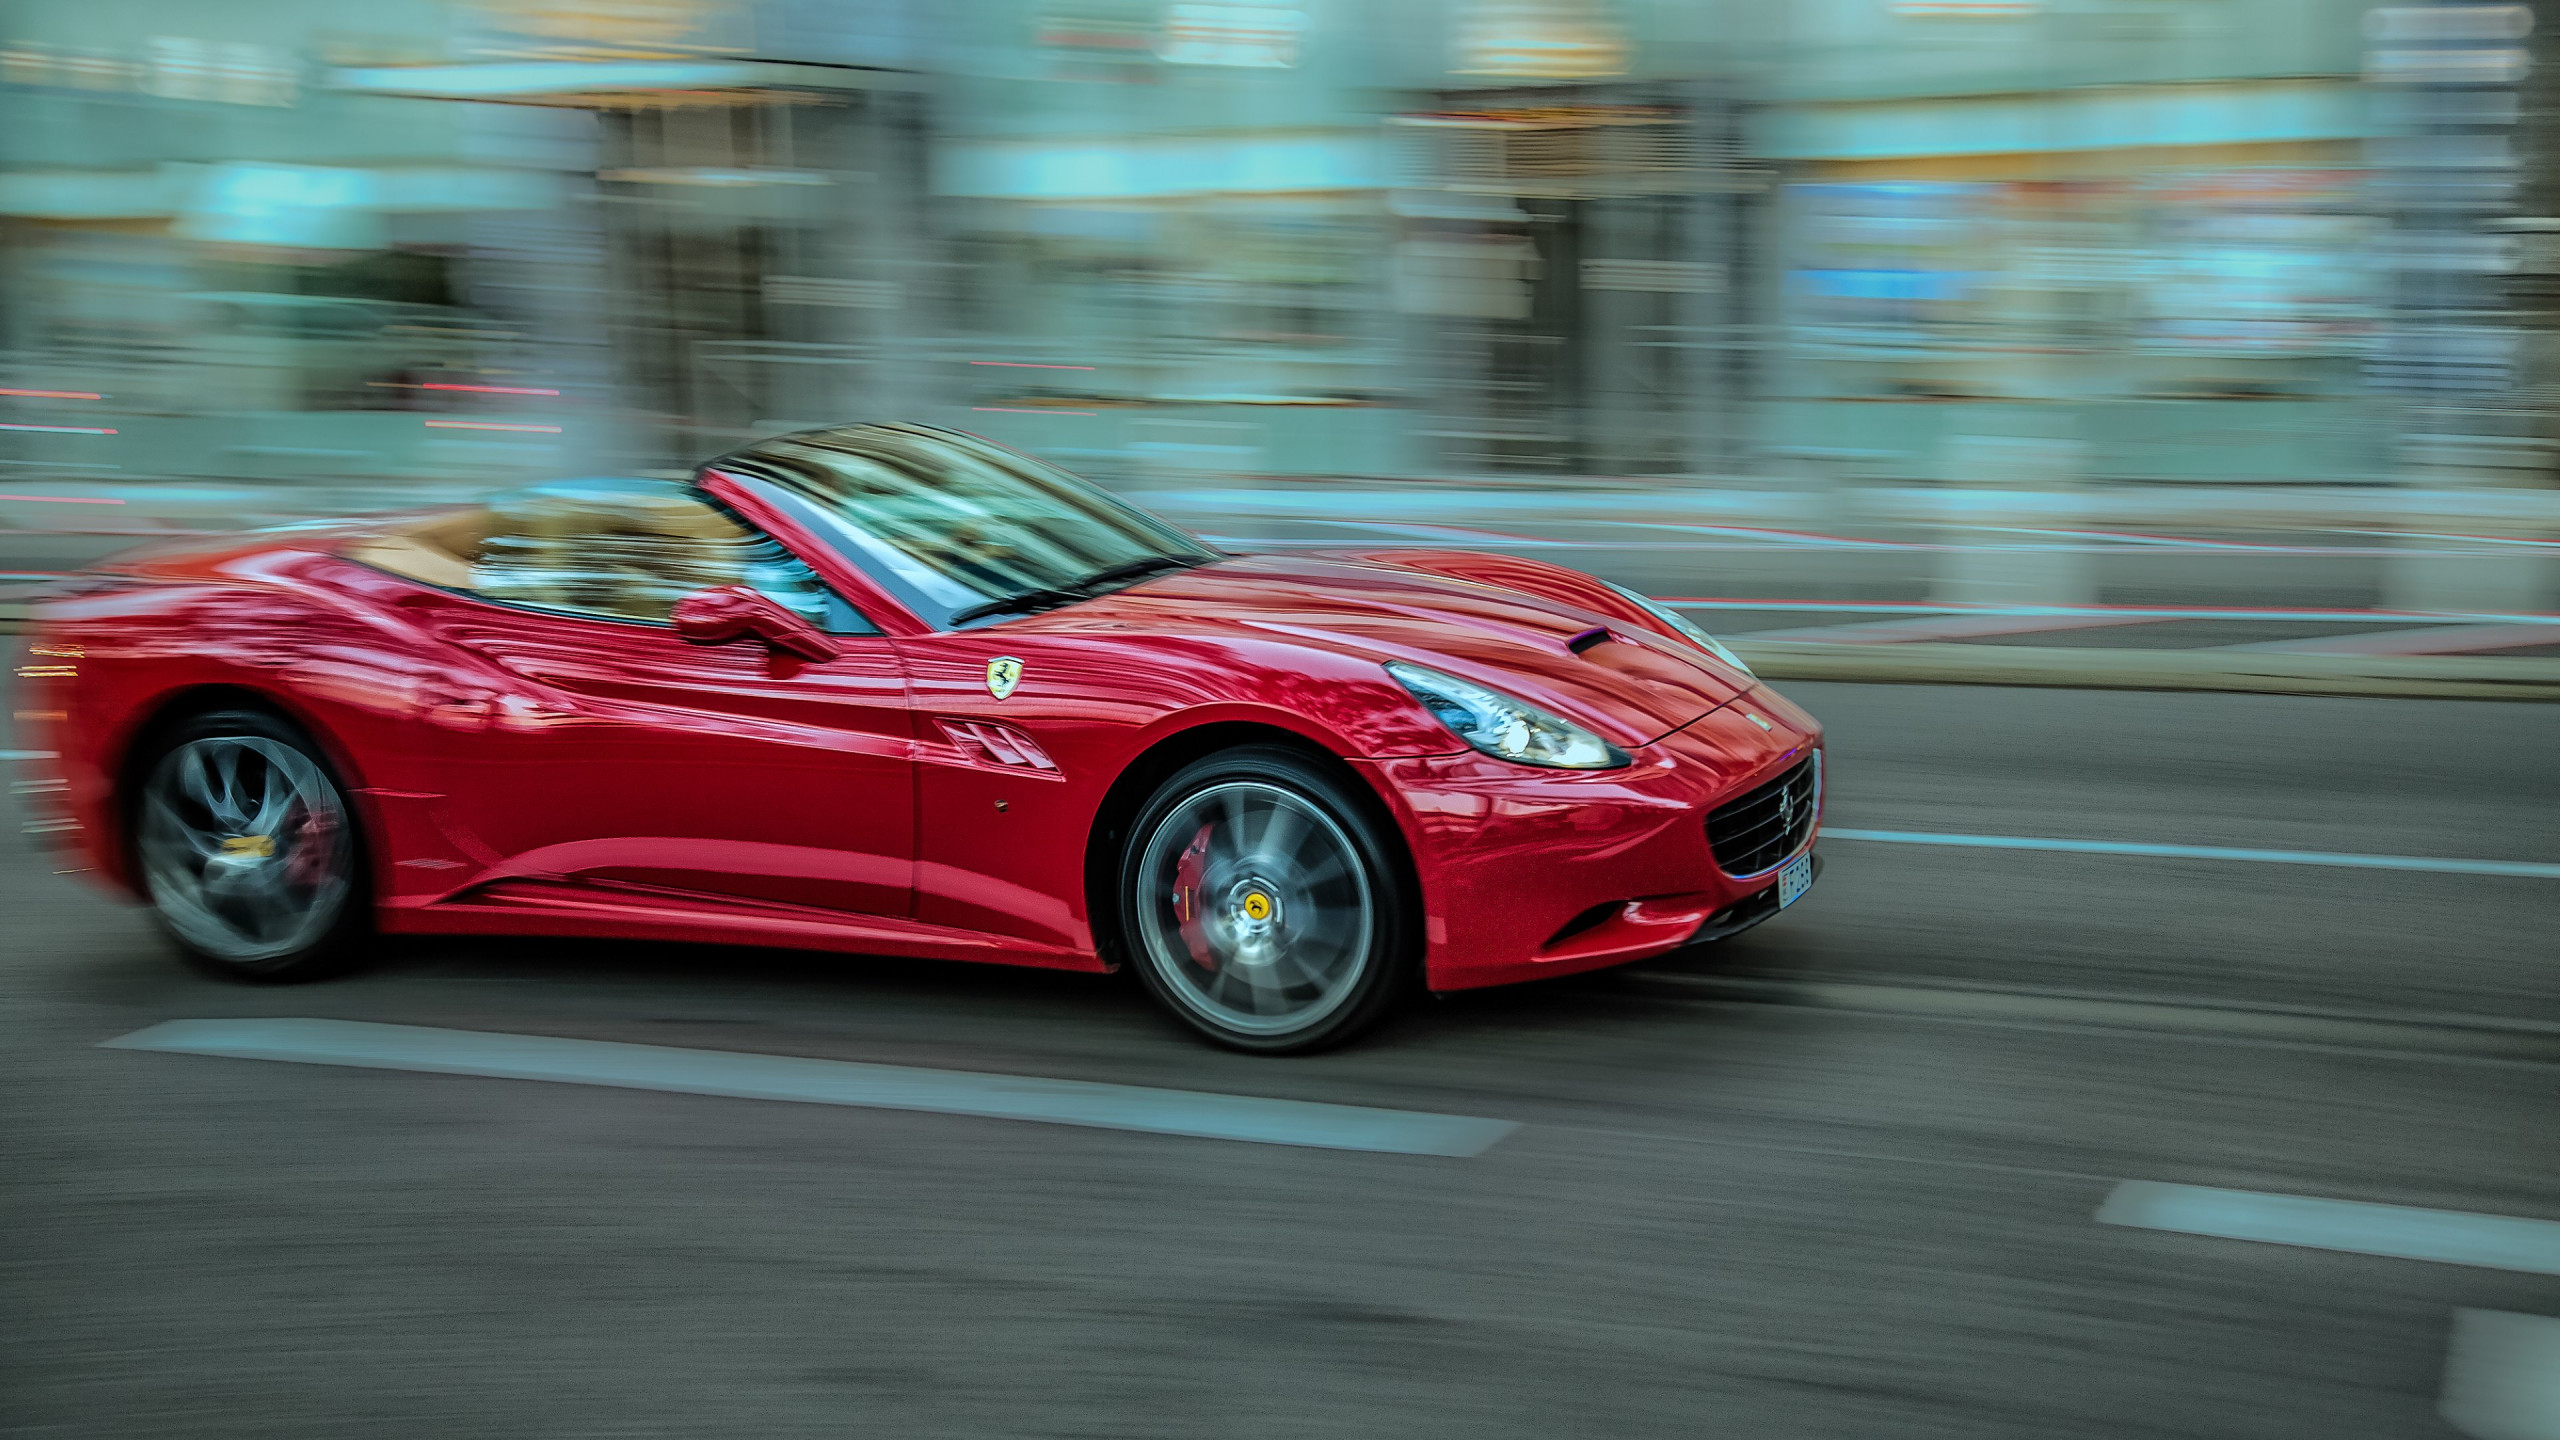 Ferrari in motion wallpaper 2560x1440